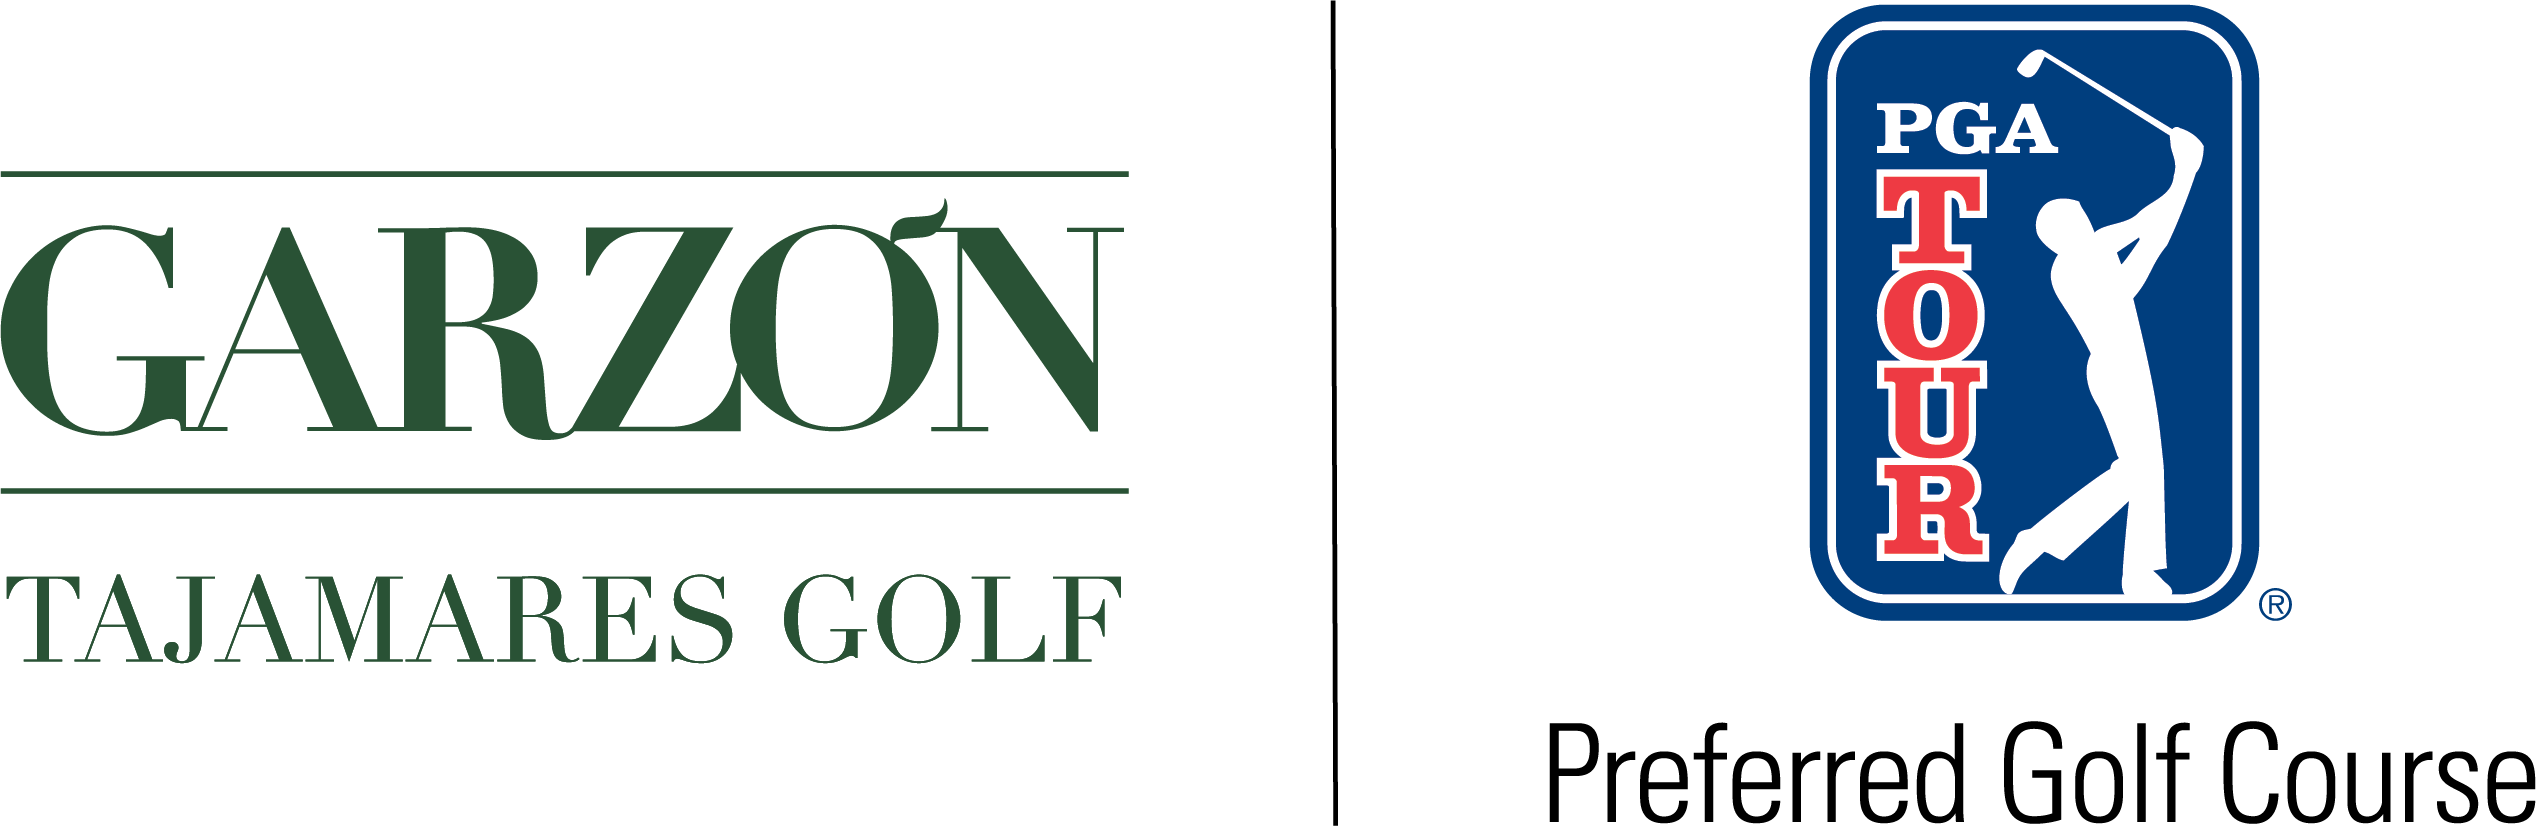 Garzon Tajamares Golf Club and PGA